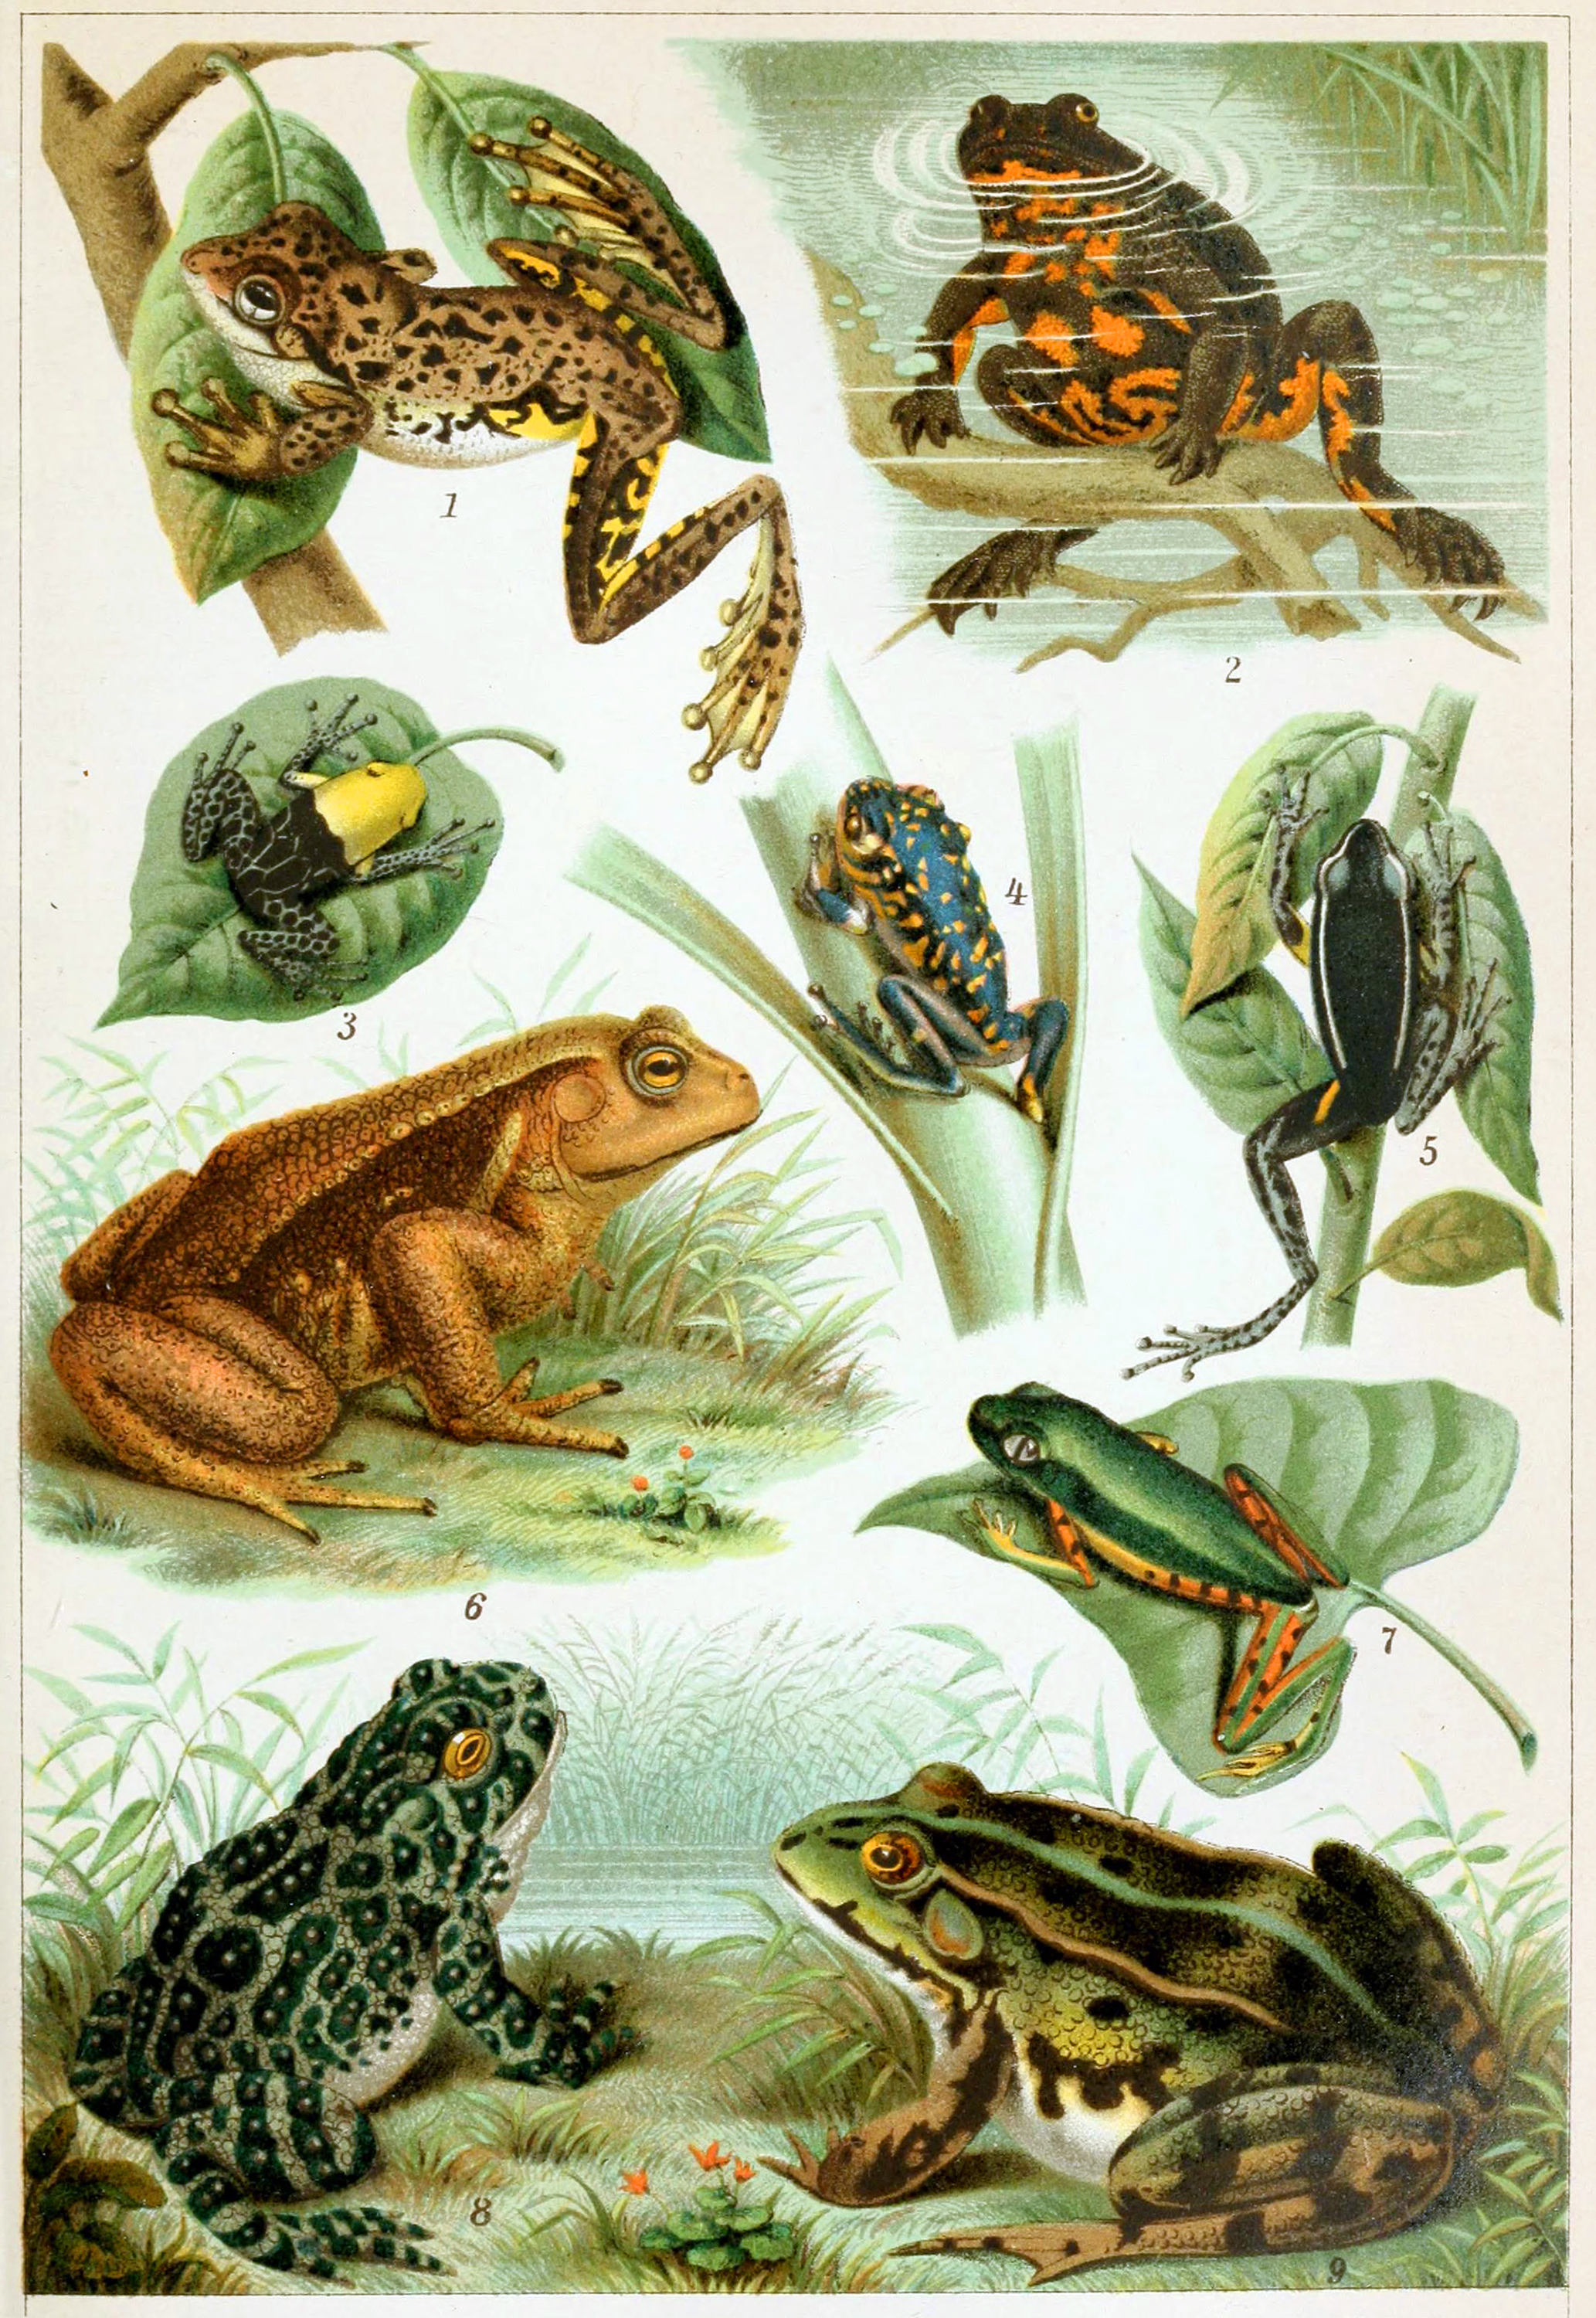 Where do most frogs originate?